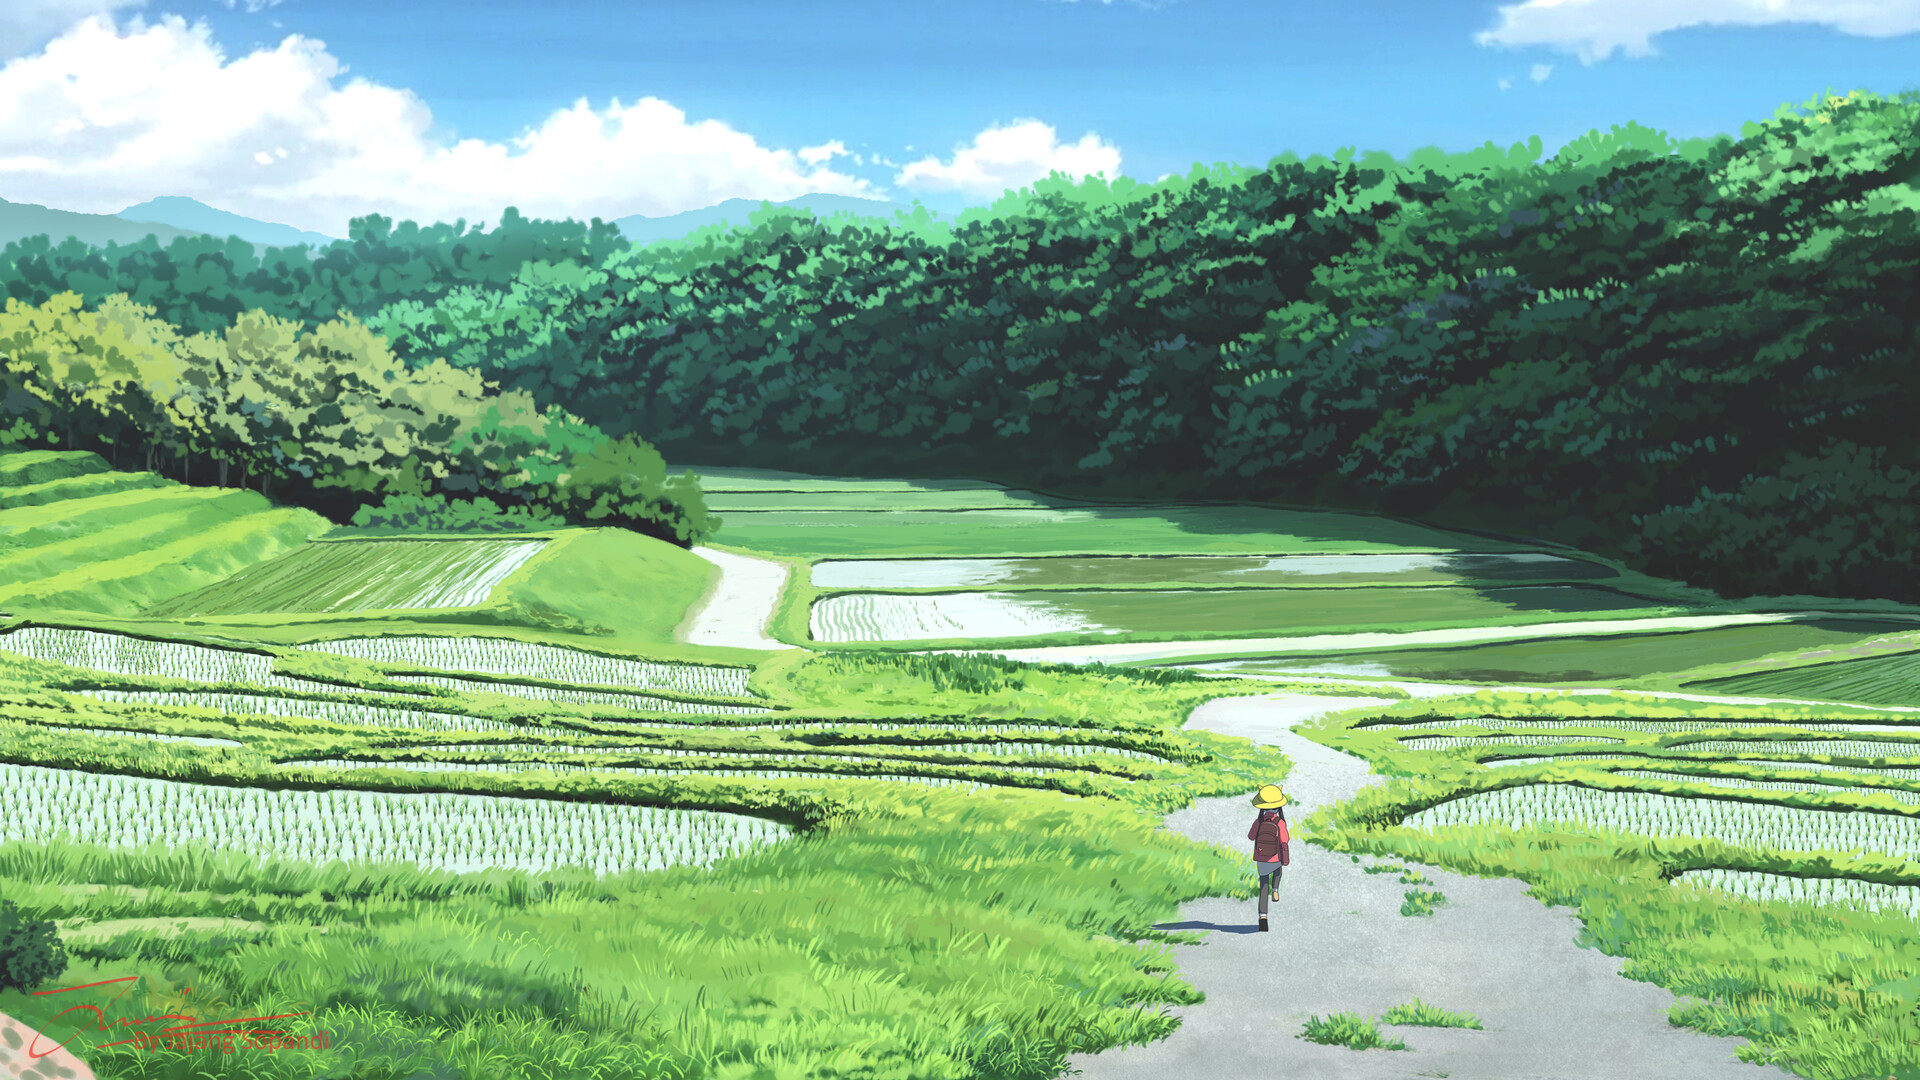 Jajang Sopandi Landscape Digital Art Clear Sky Clouds Field Rice Paddy Trees Children Anime Girls An 1920x1080